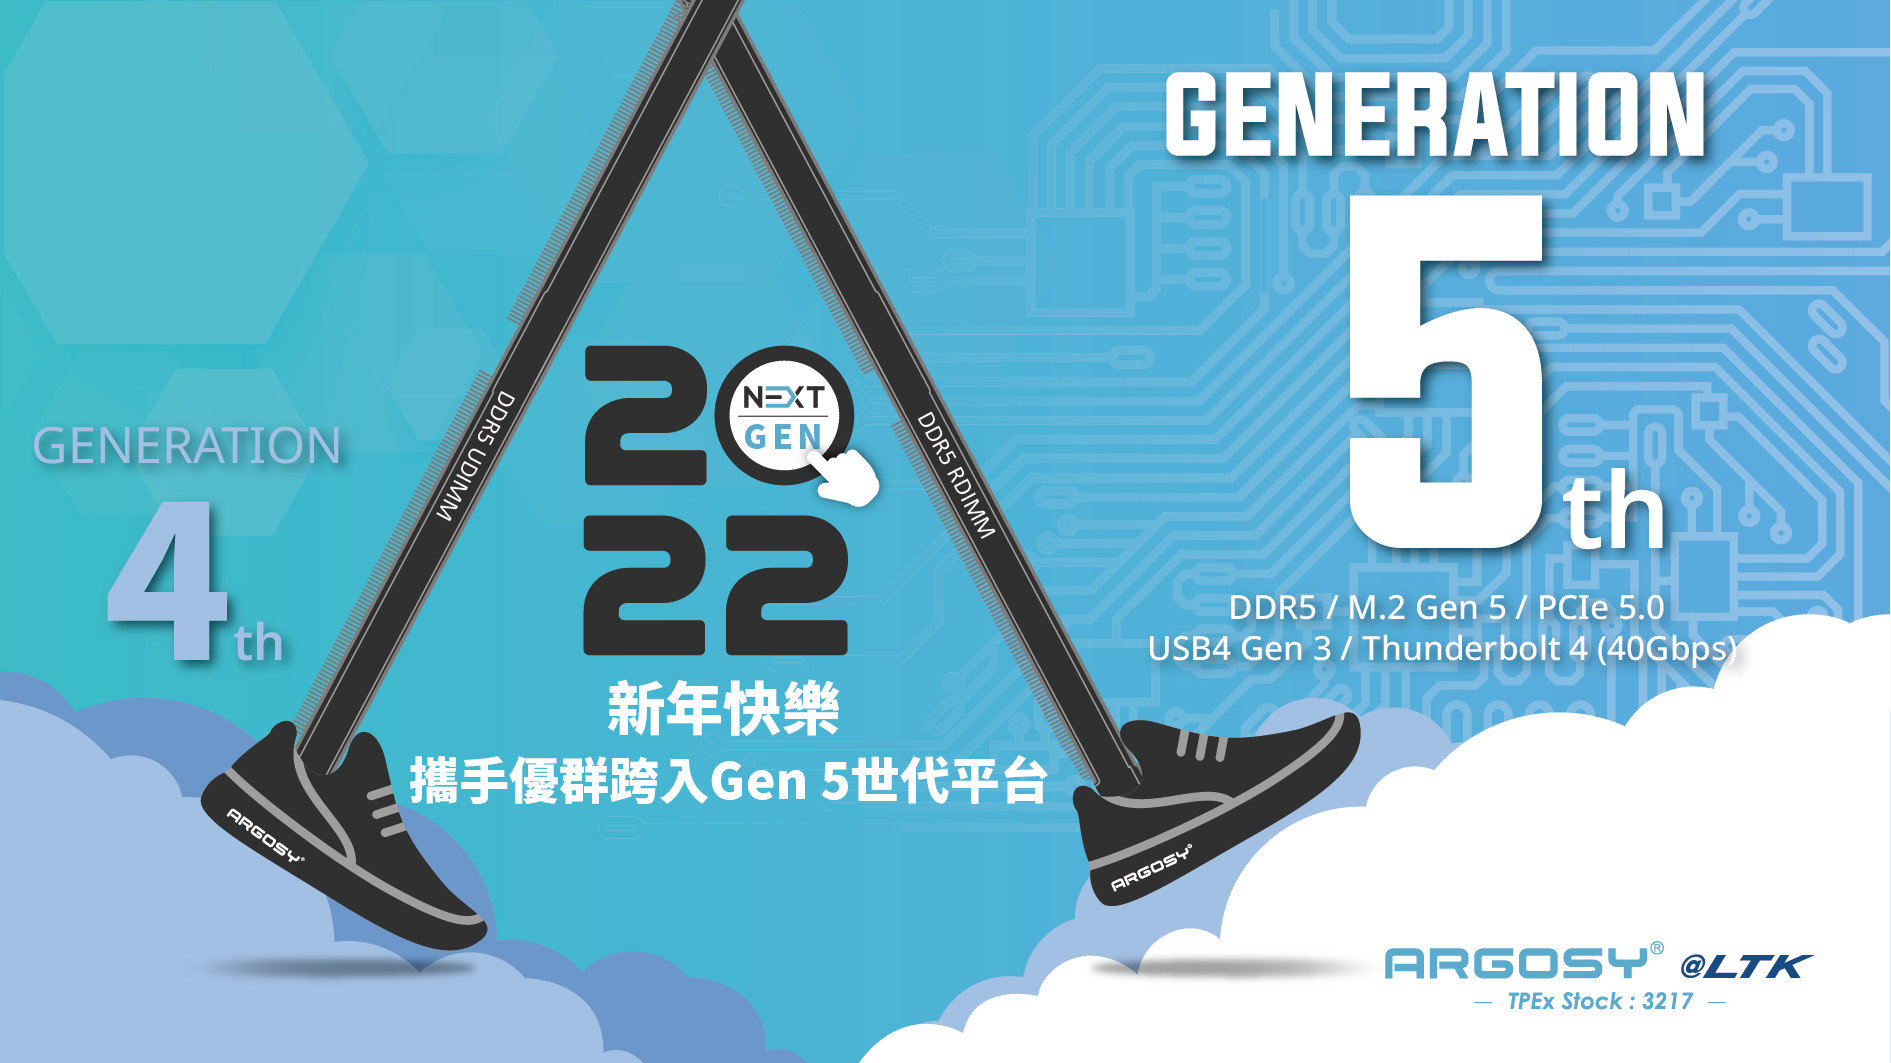 優群科技- 迎接 2022年 Gen 5世代平台-DDR5, M.2 Gen 5, PCIe 5.0, USB4, Thunderbolt 4